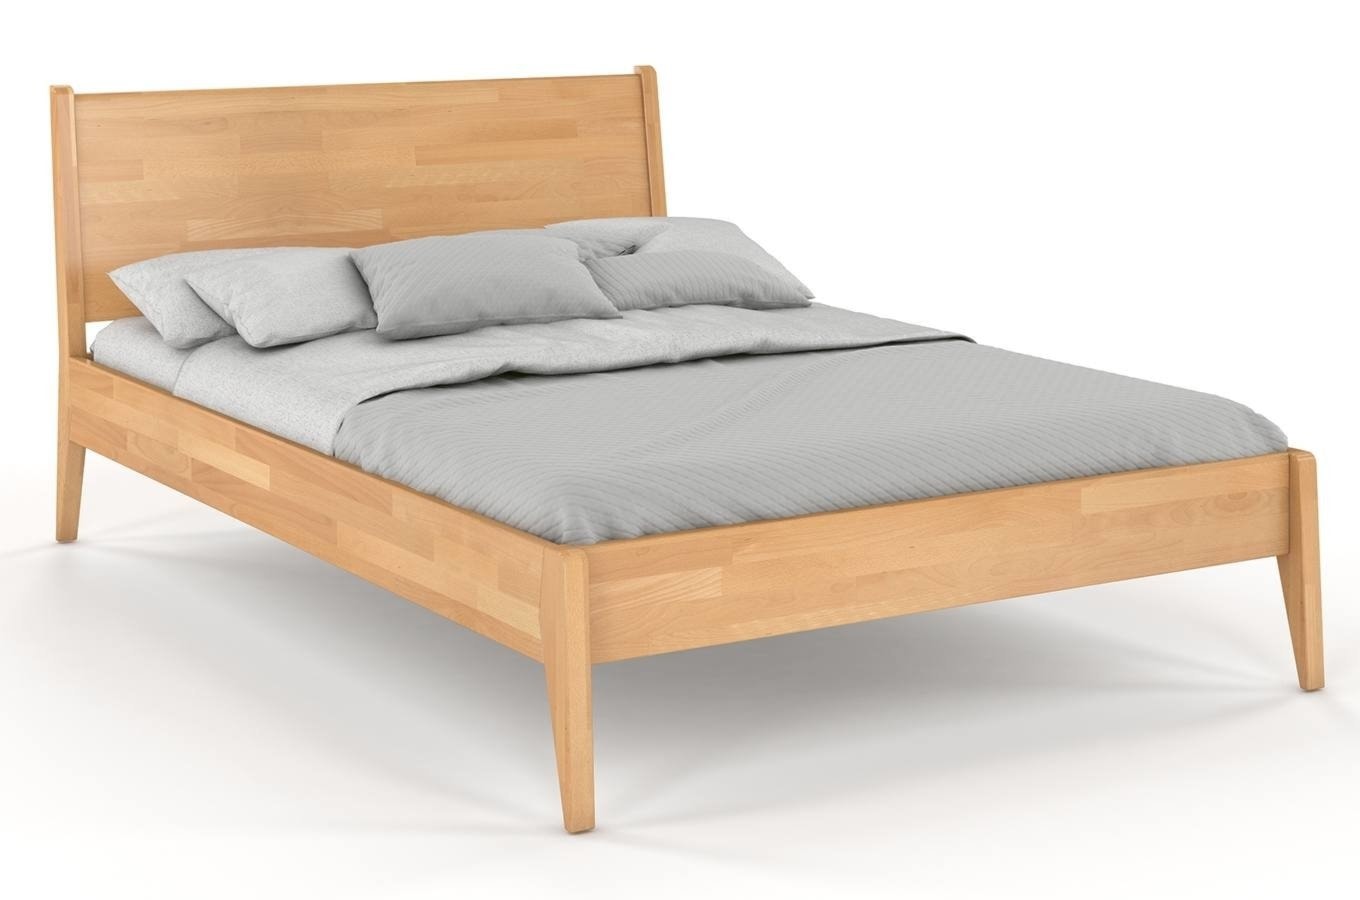 Łóżko drewniane Visby Radom - zdjęcie od VISBY Nowoczesne Meble Drewniane - Homebook